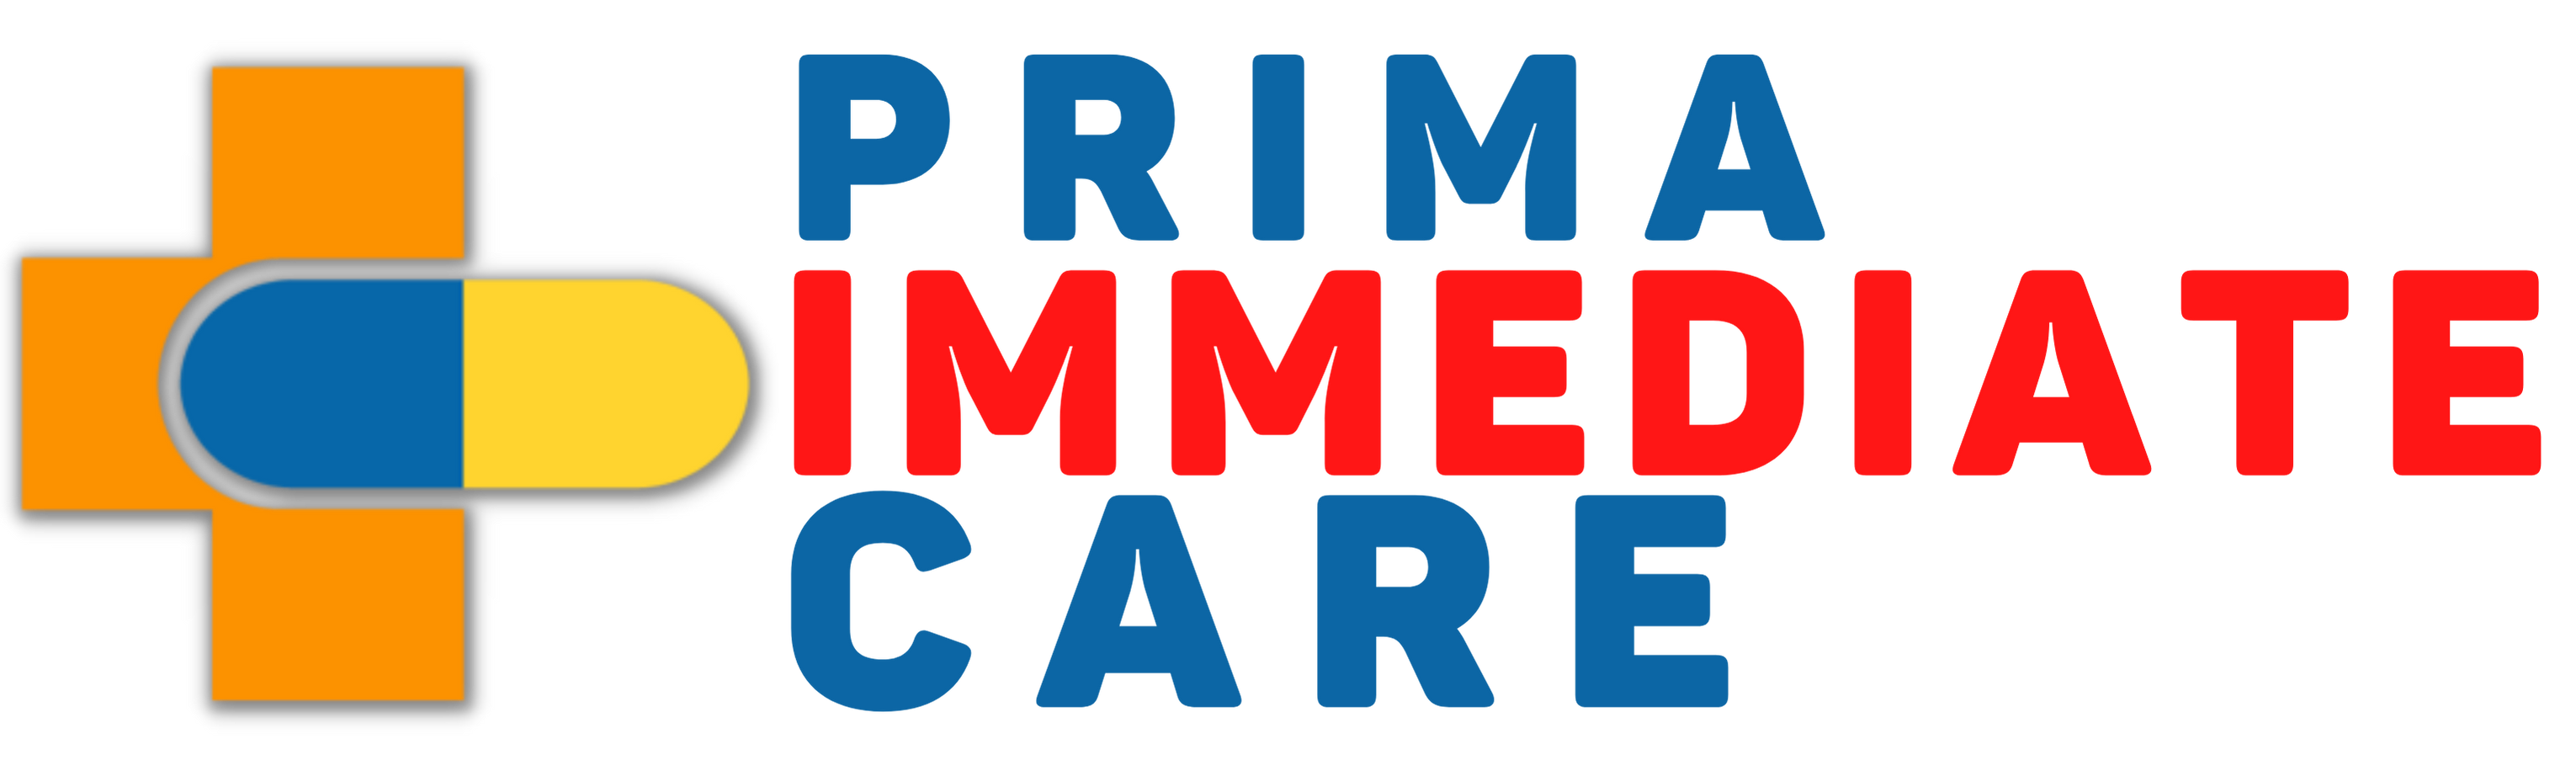 Prima Immediate Care - South Riding Logo